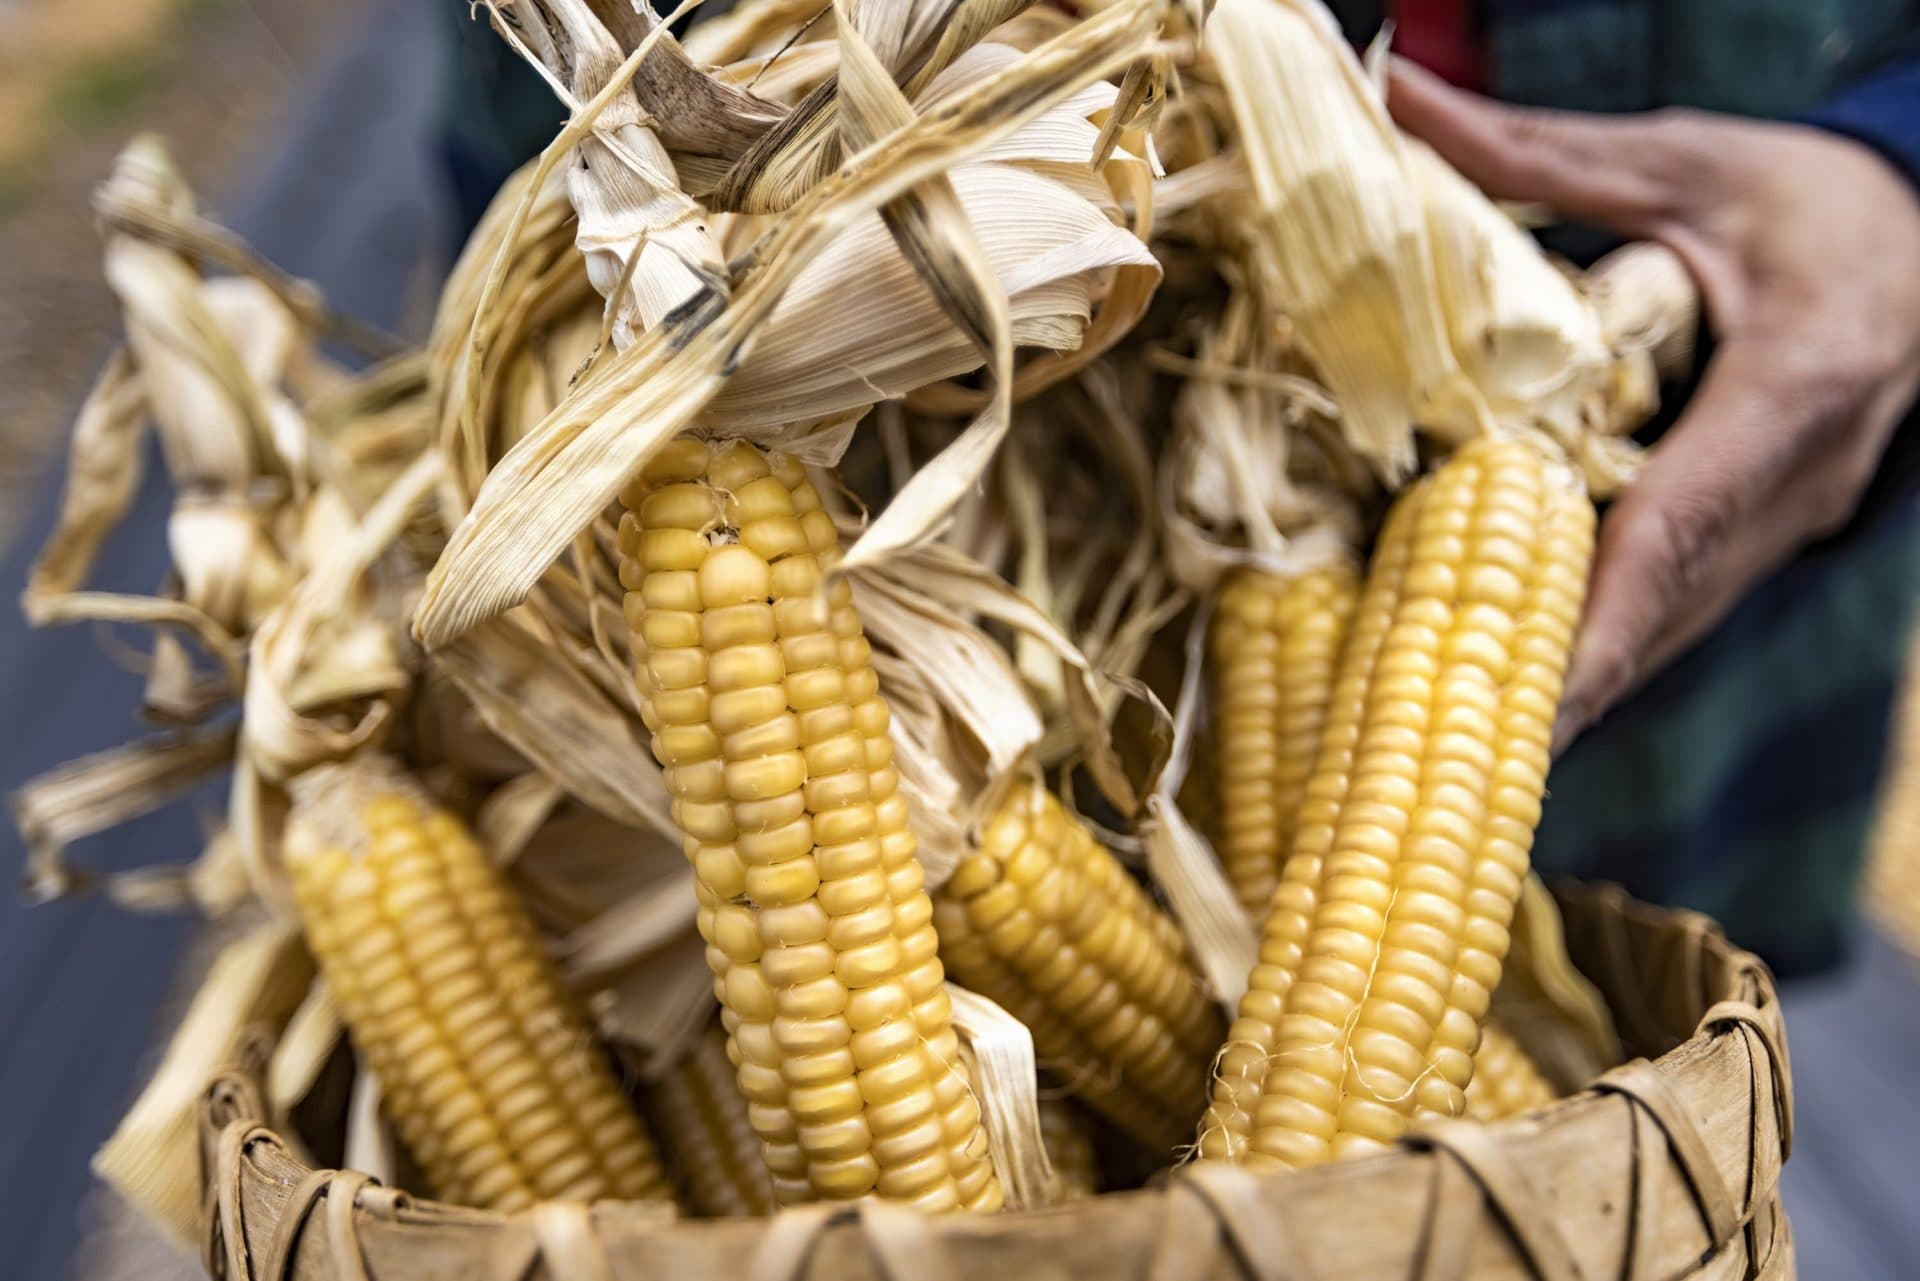 Narragansett flint corn. (Jesse Costa/WBUR)